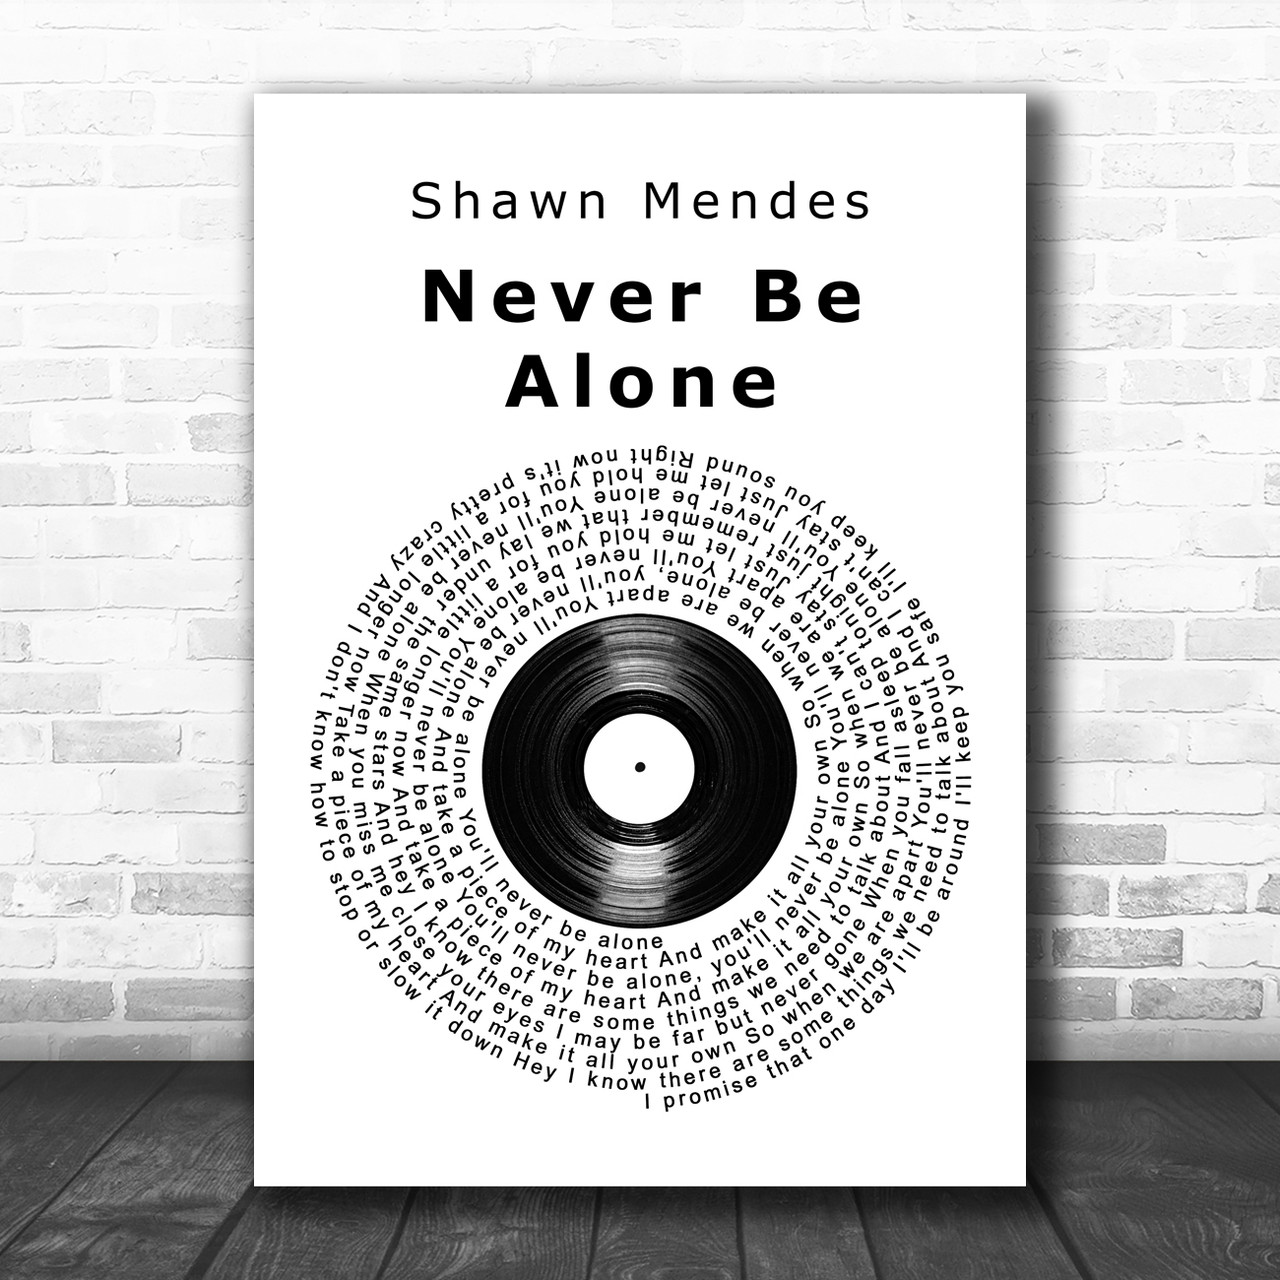 Shawn Mendes-NEVER BE ALONE [TRADUÇÃO] 